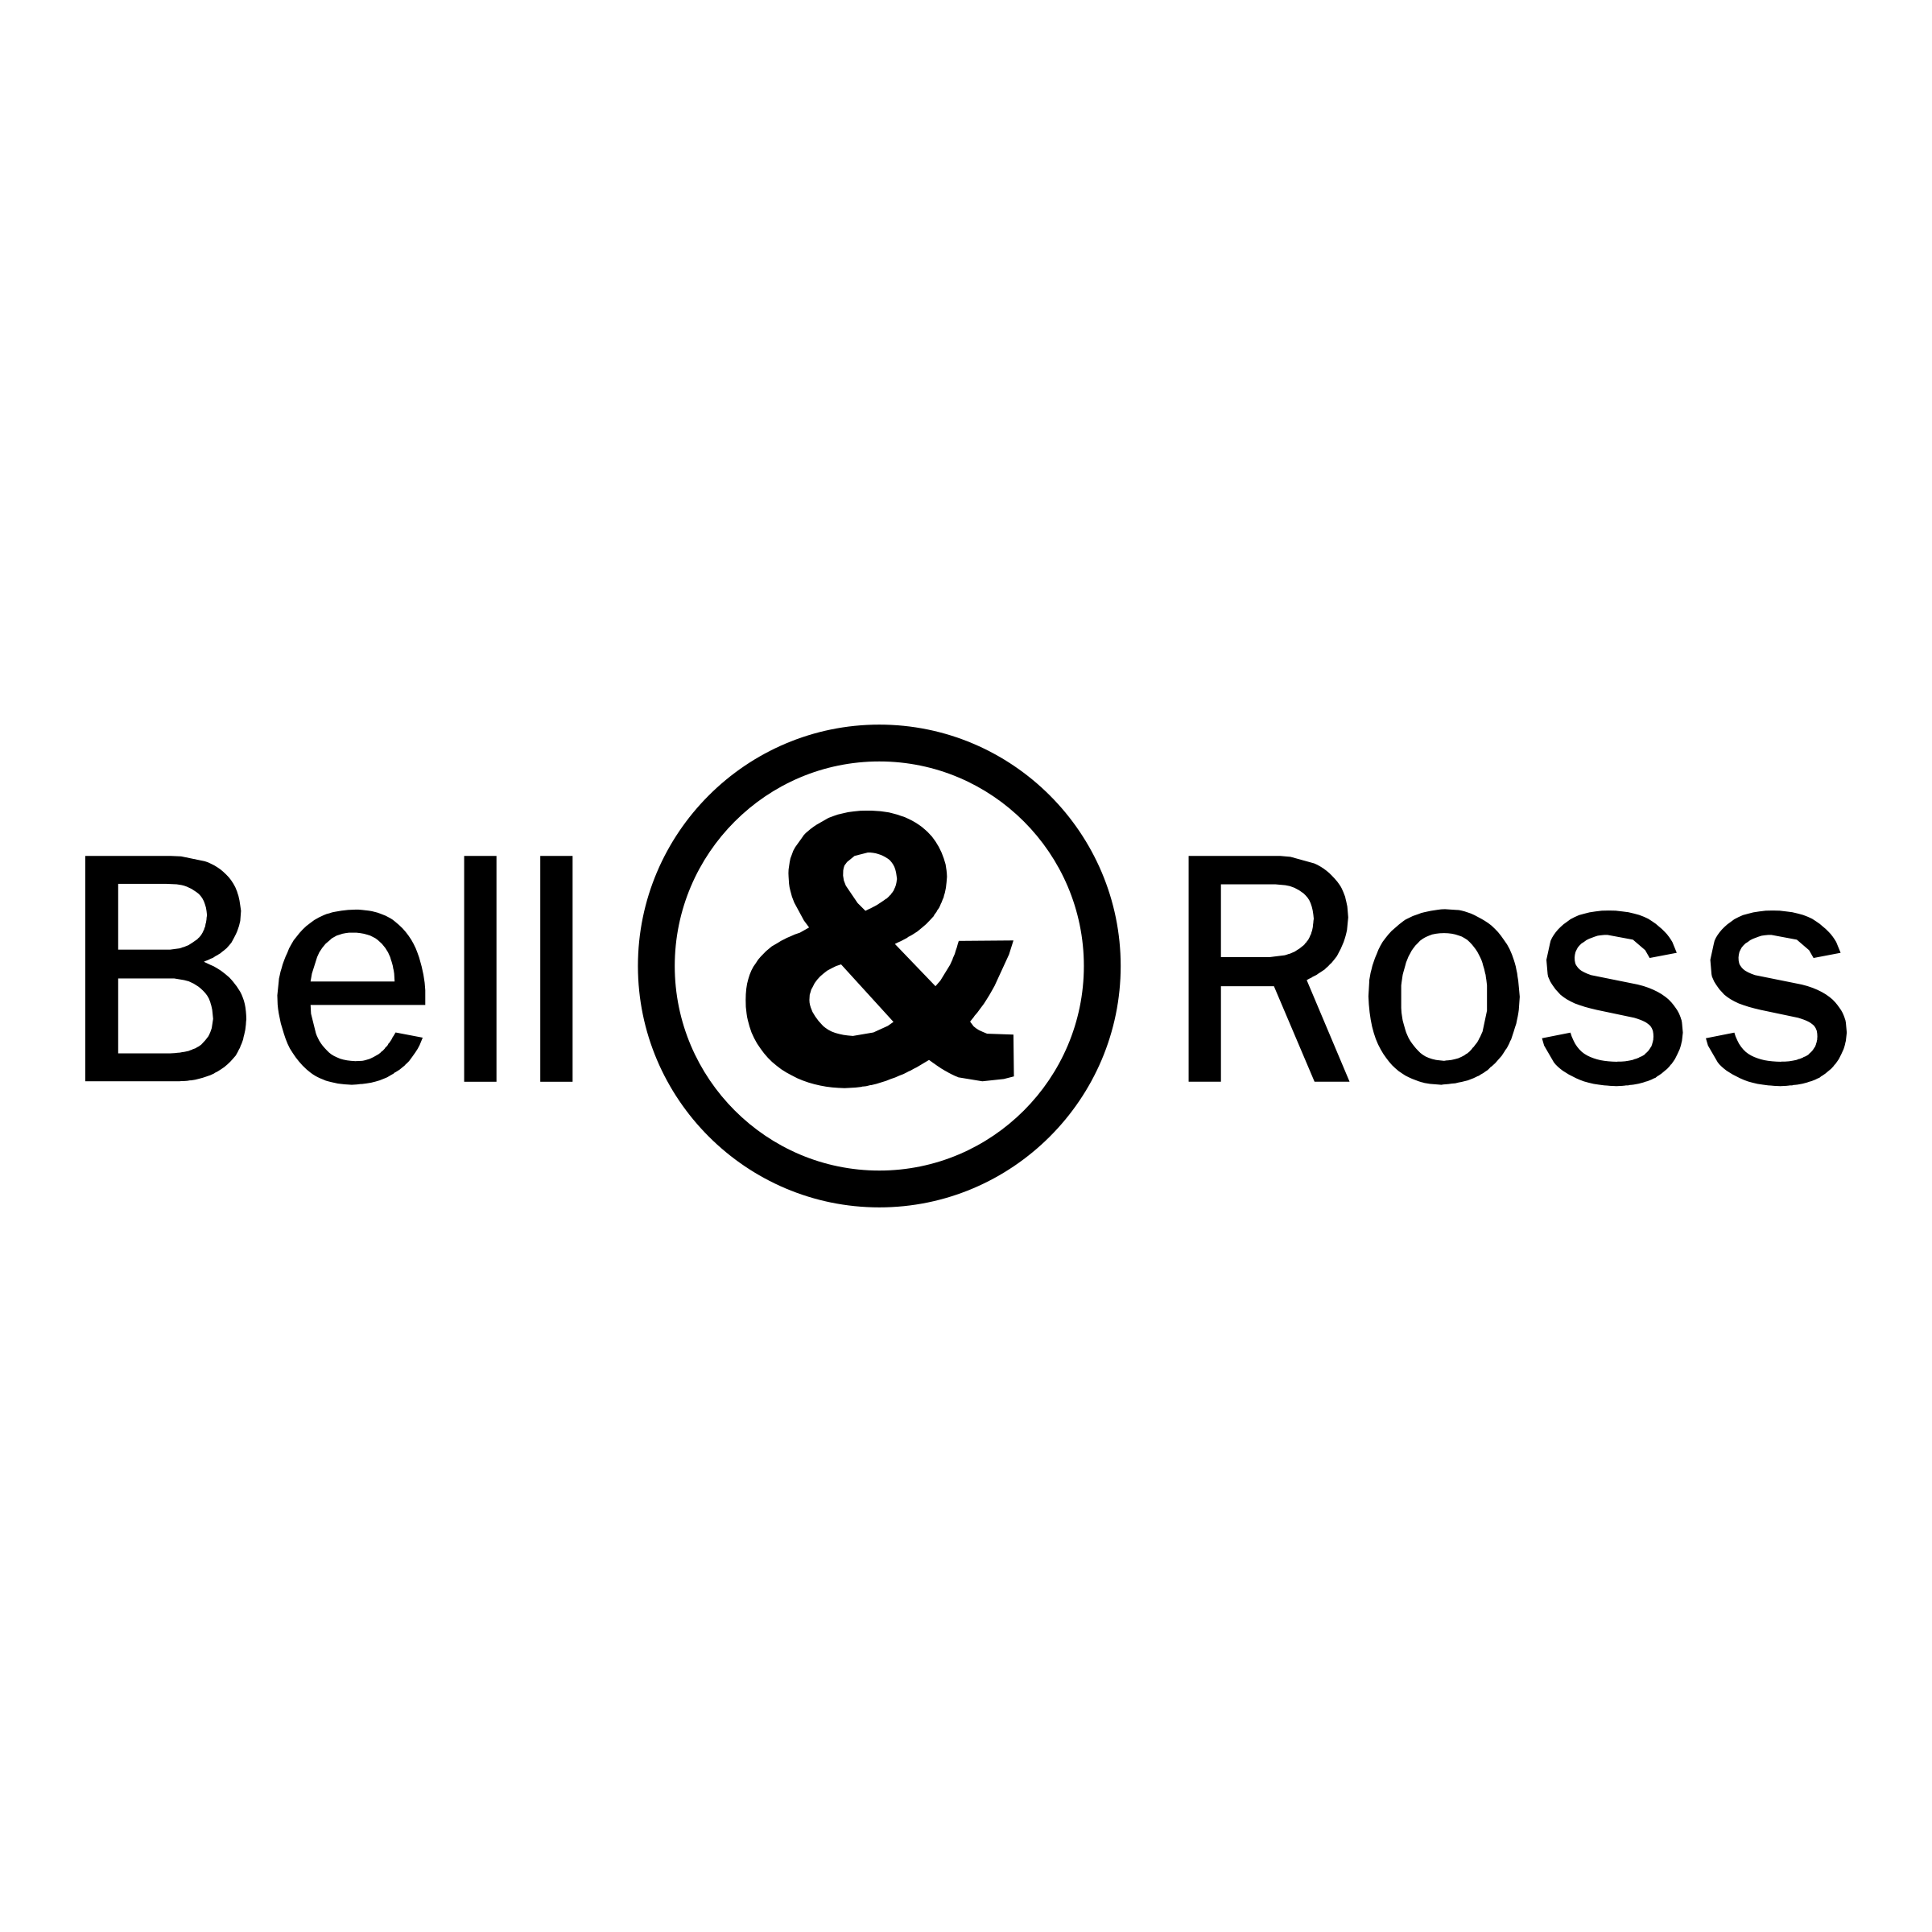 Bell Supply Logo - Bell & Ross Logo PNG Transparent & SVG Vector - Freebie Supply